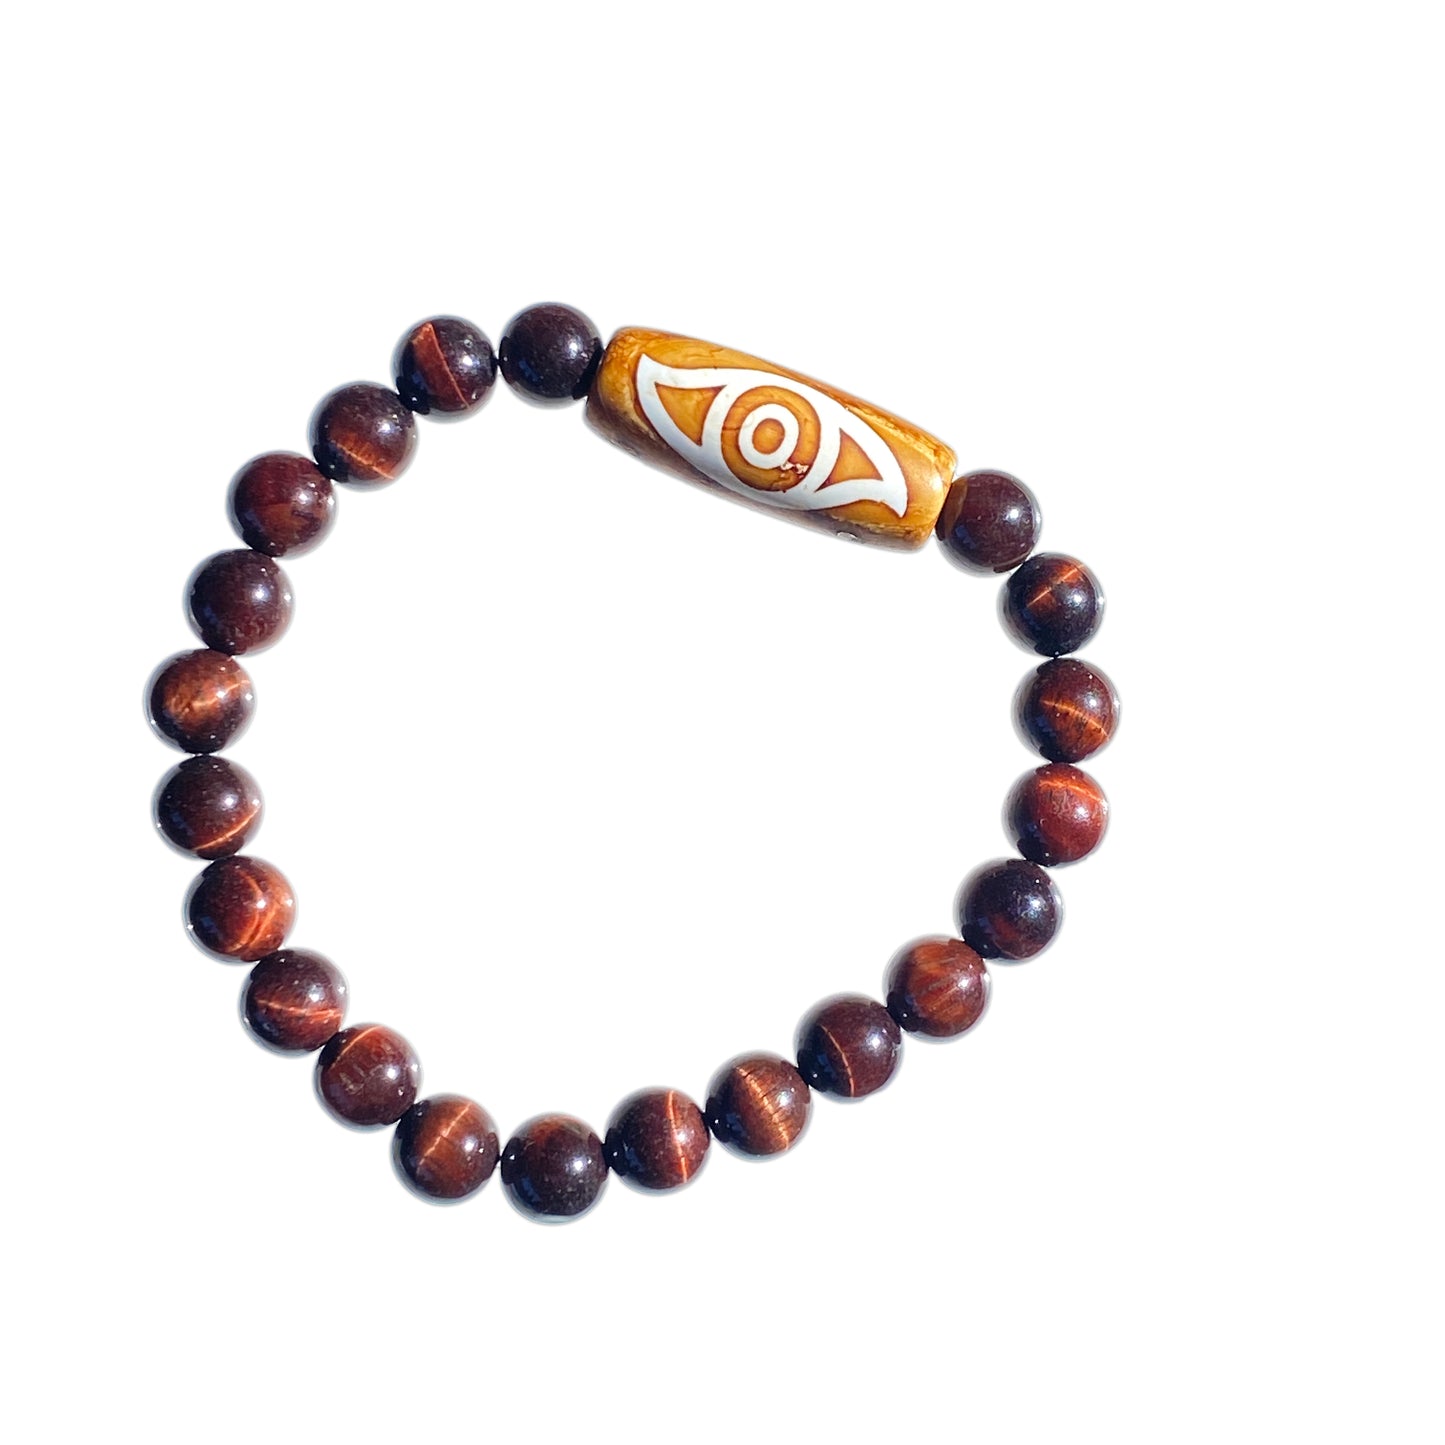 Tiger’s Eye gemstones and Tibetan Agate Bracelet